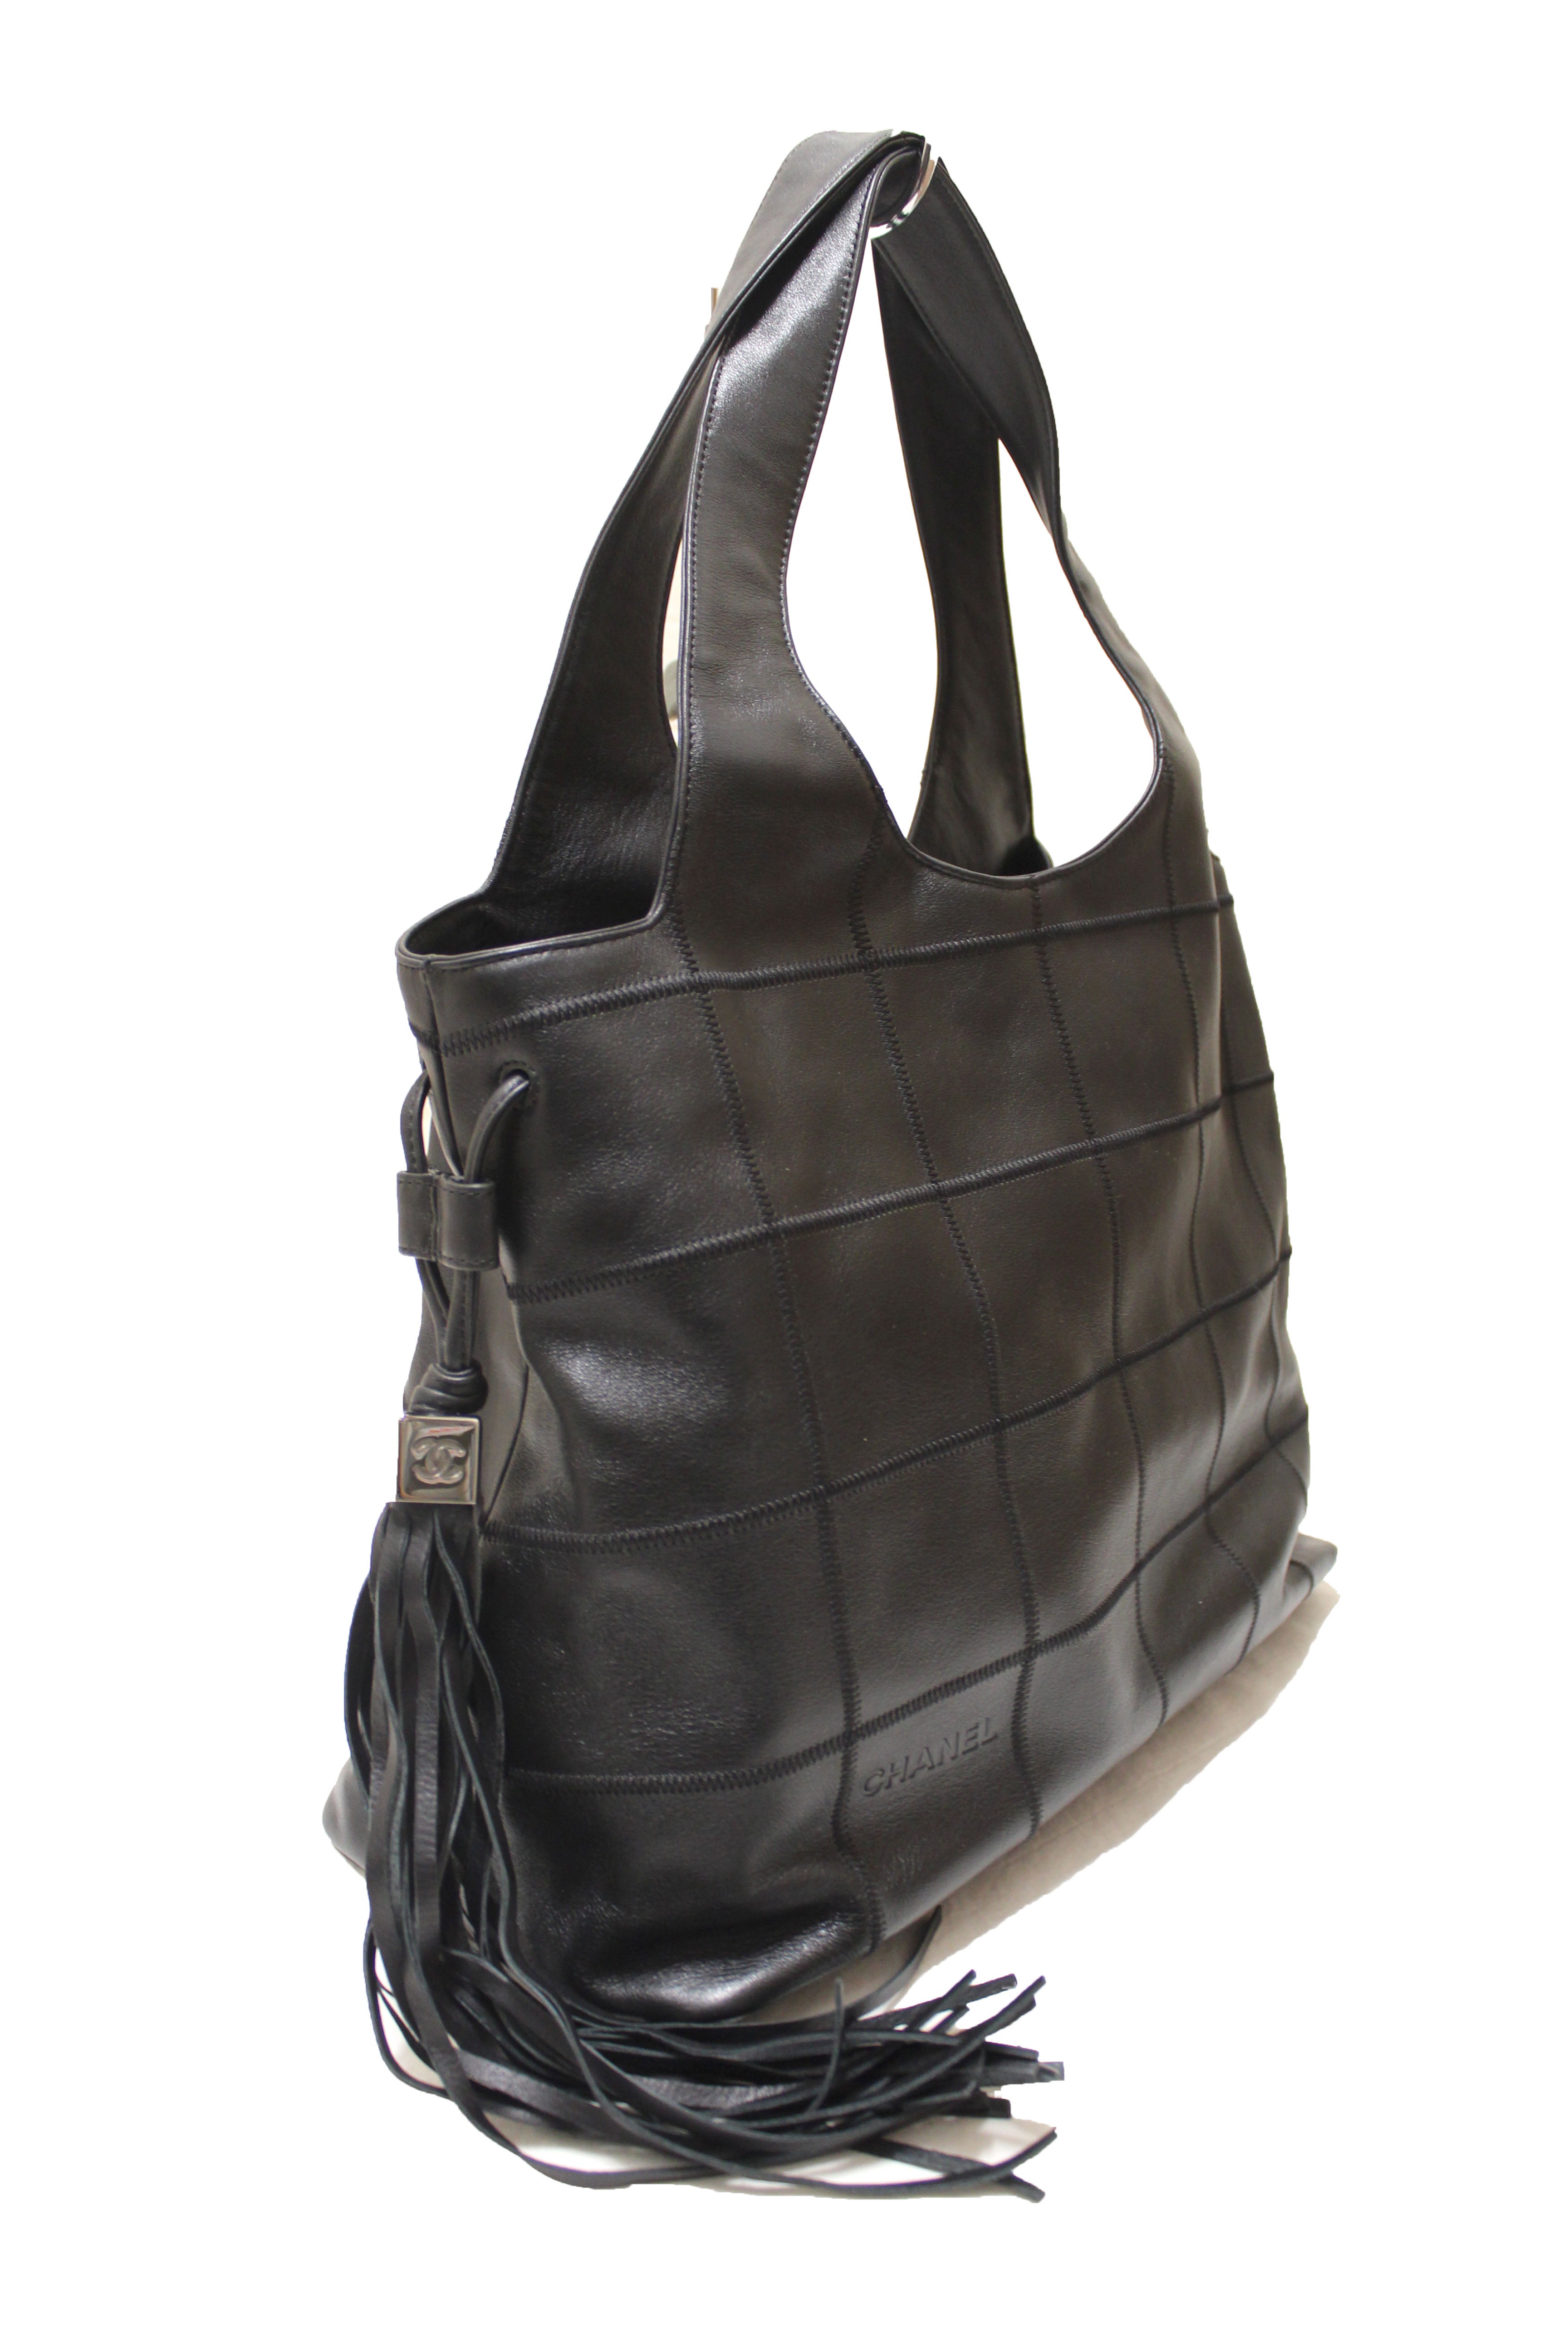 Chanel - Black hobo bag